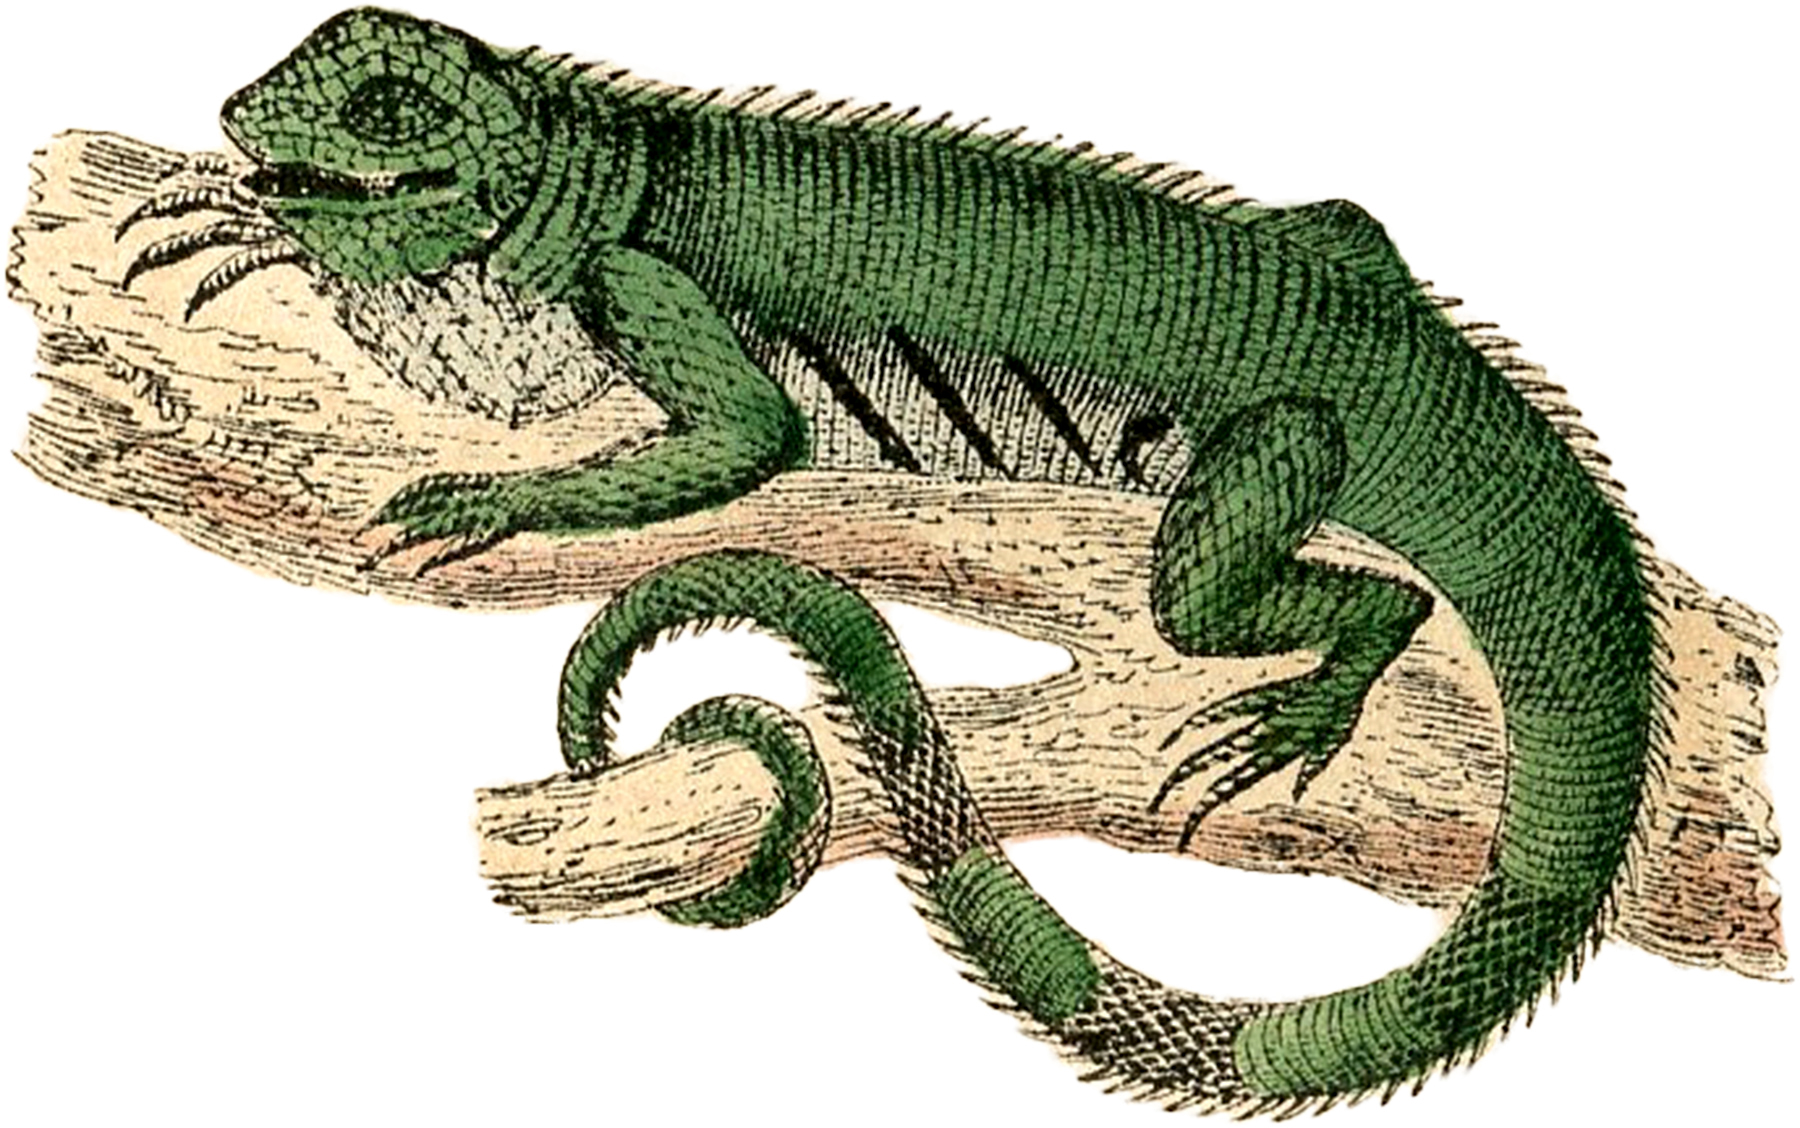 Free Public Domain Lizard Image! - The Graphics Fairy